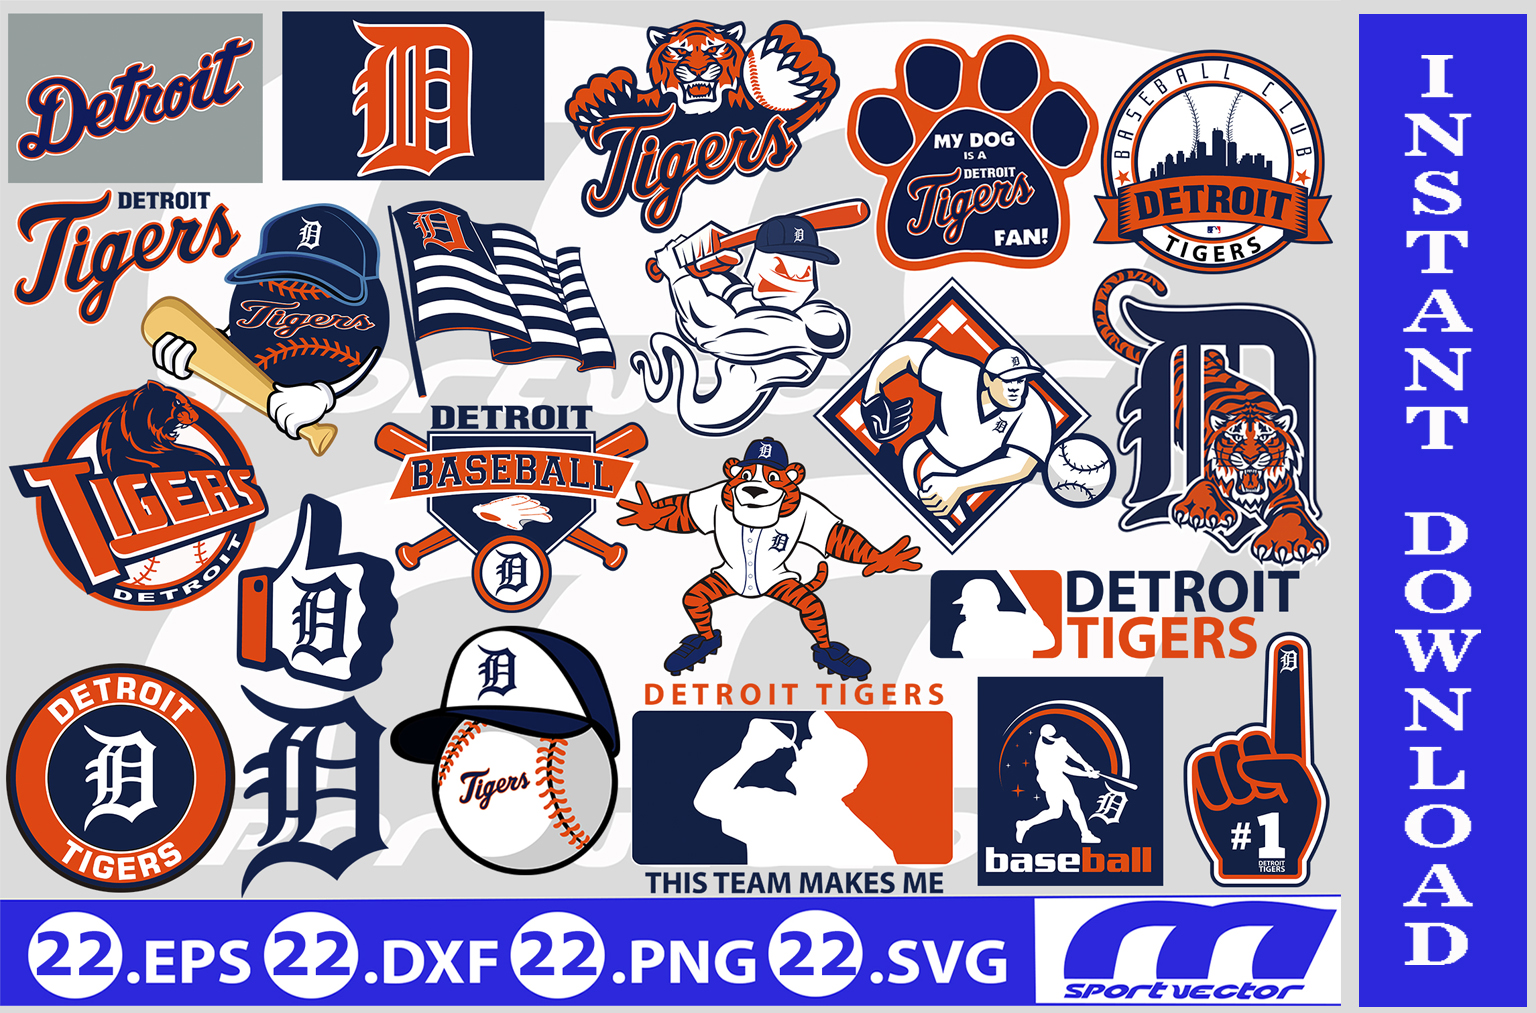 Detroit Tigers D Logo drawing free image download